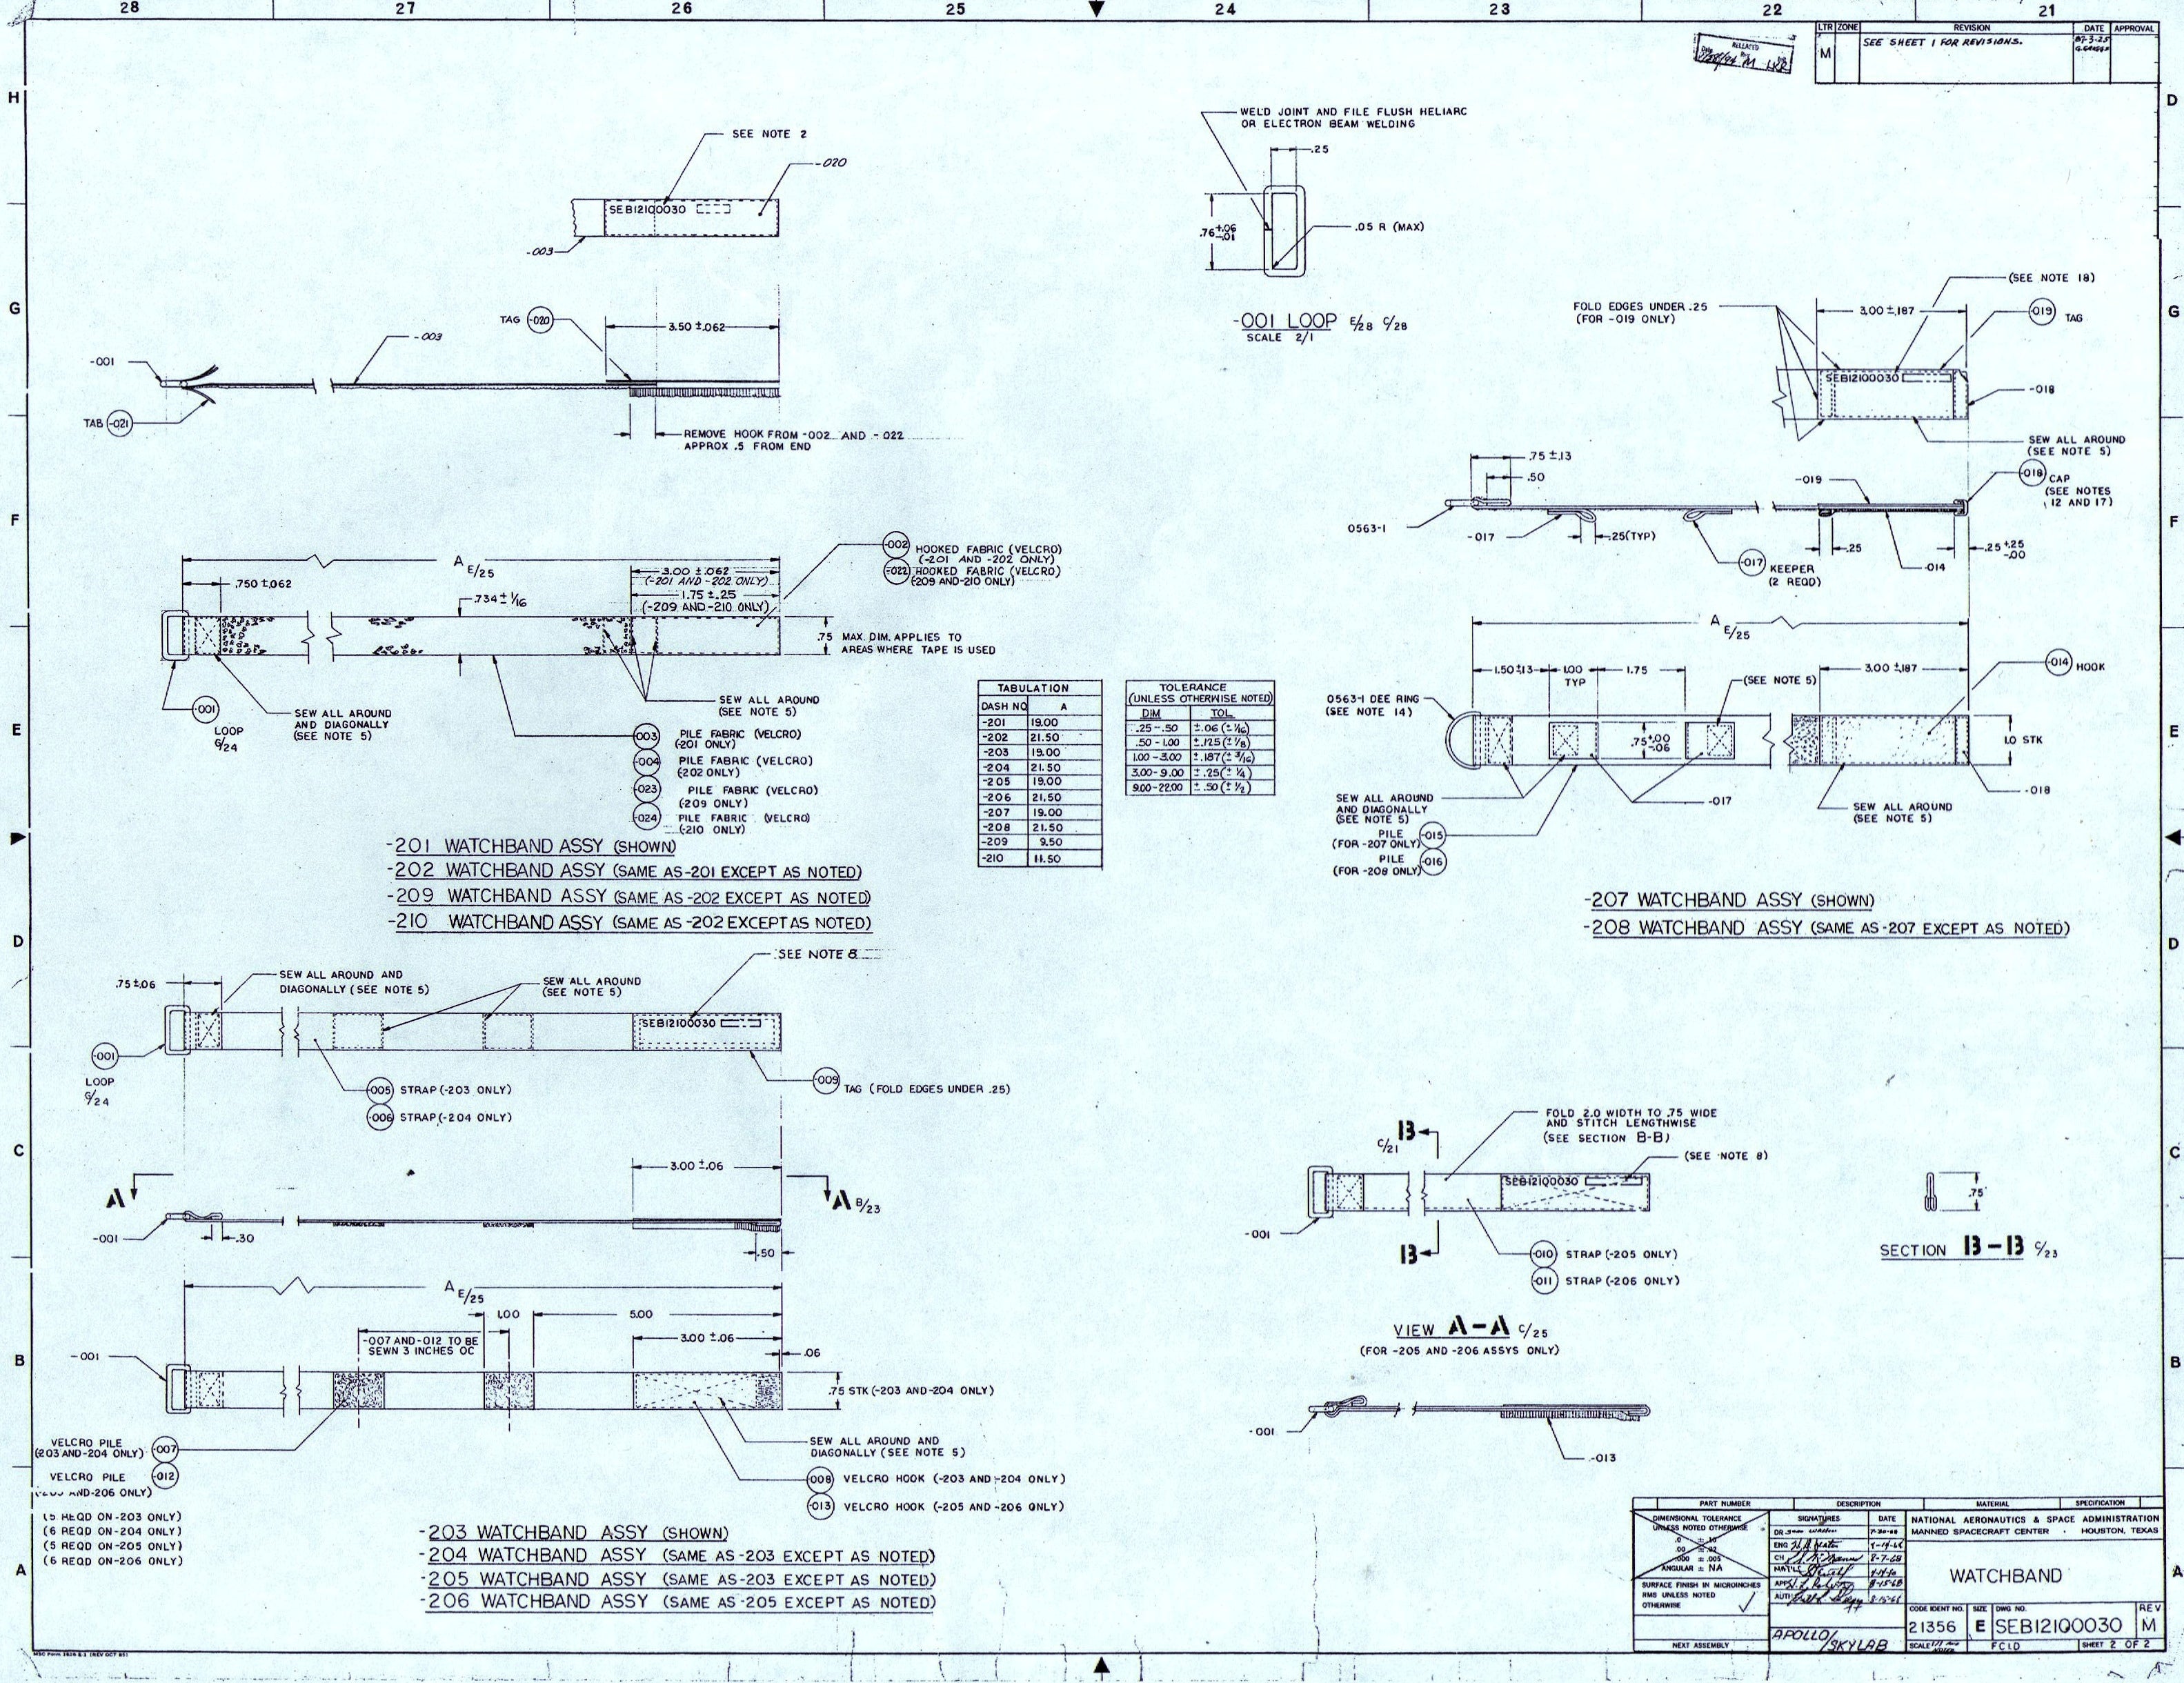 Apollo Skylab technical drawing for SEB12100030-202 watchband